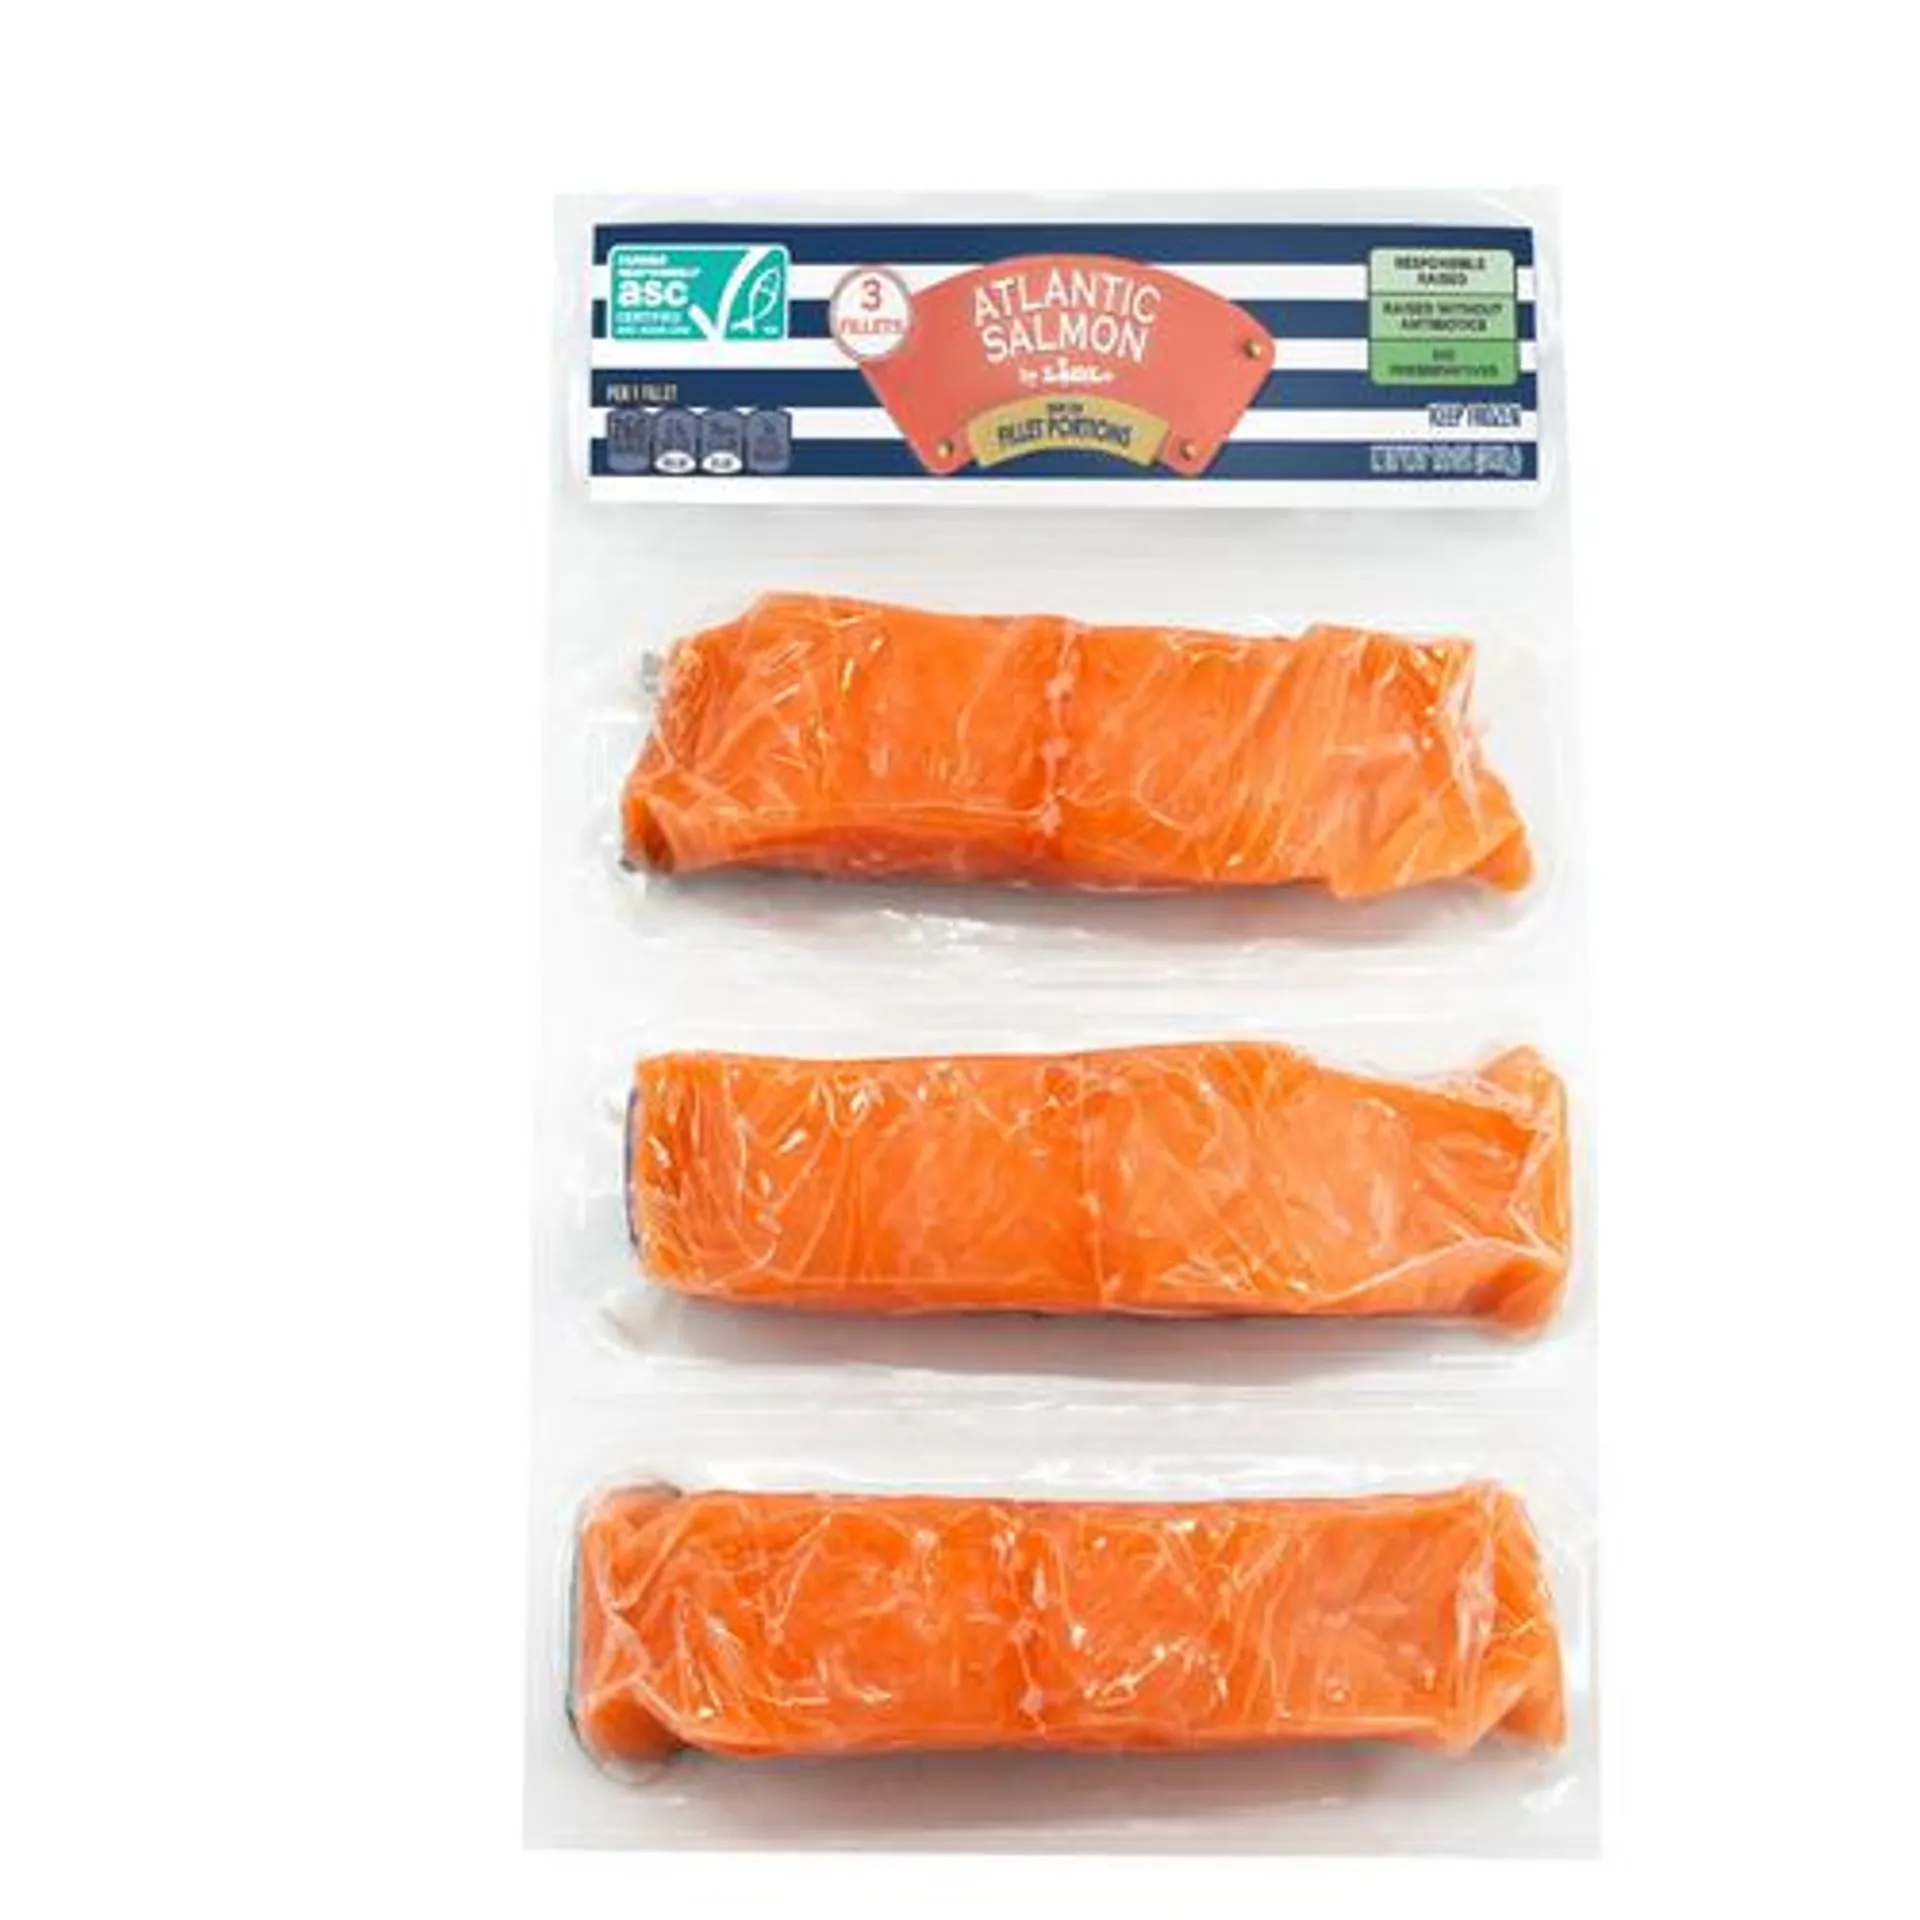 frozen Atlantic salmon filet portions, skin on